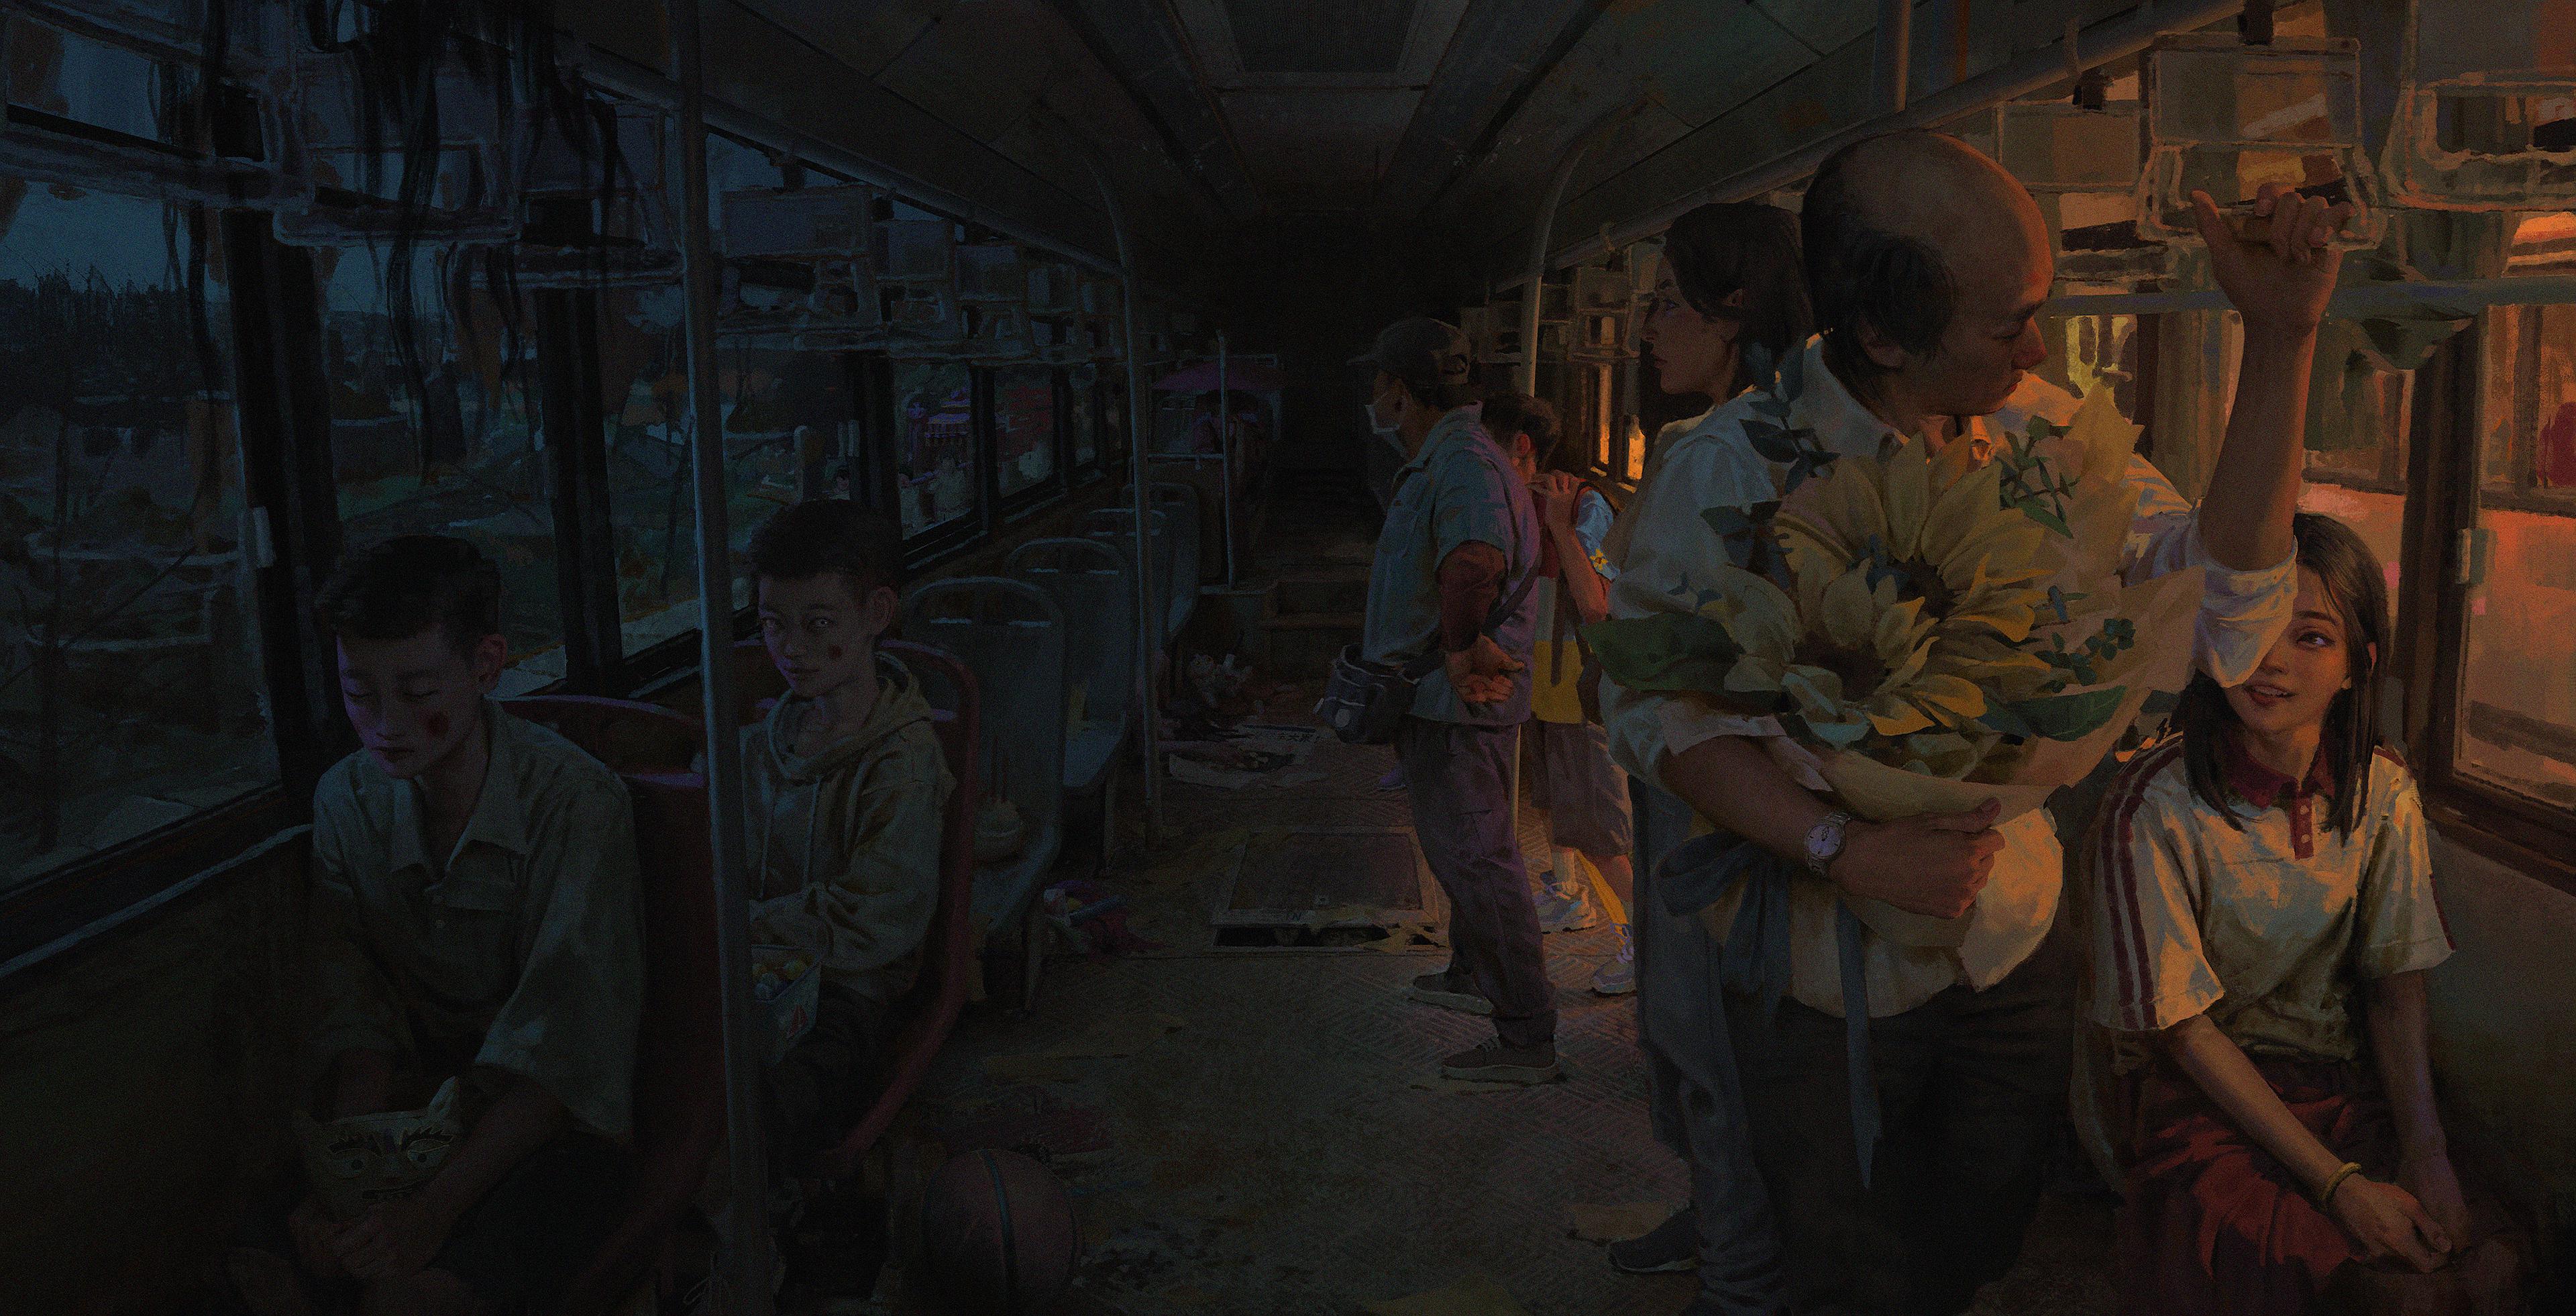 Anime 3840x1961 artwork in bus digital art train interior flowers